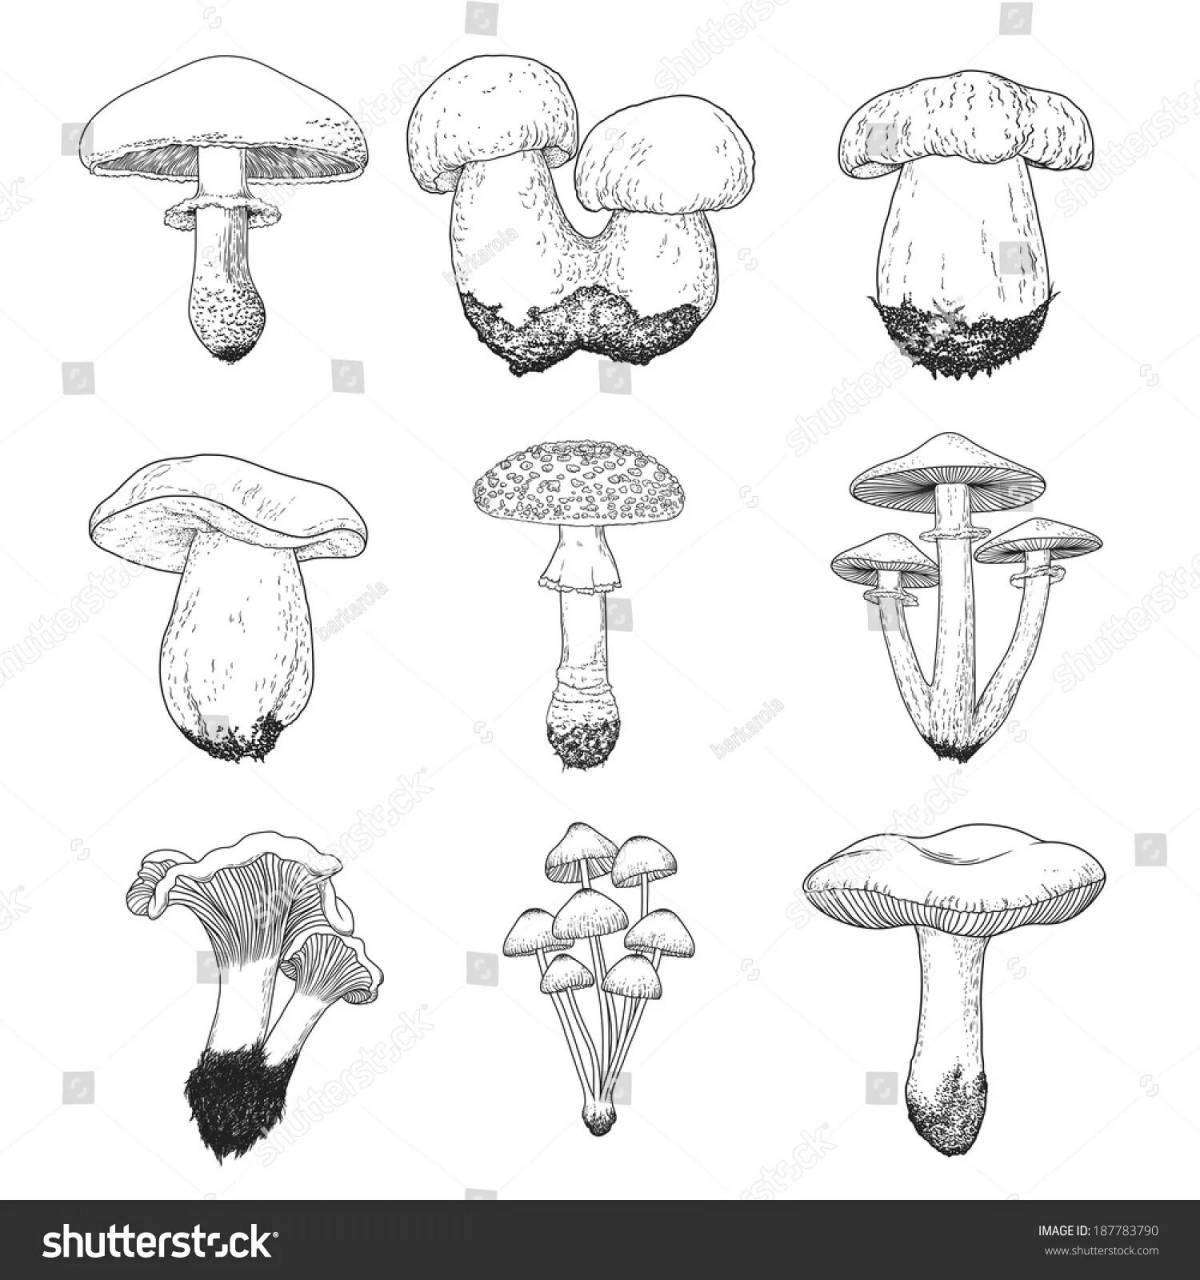 Coloring book shimmering edible mushrooms